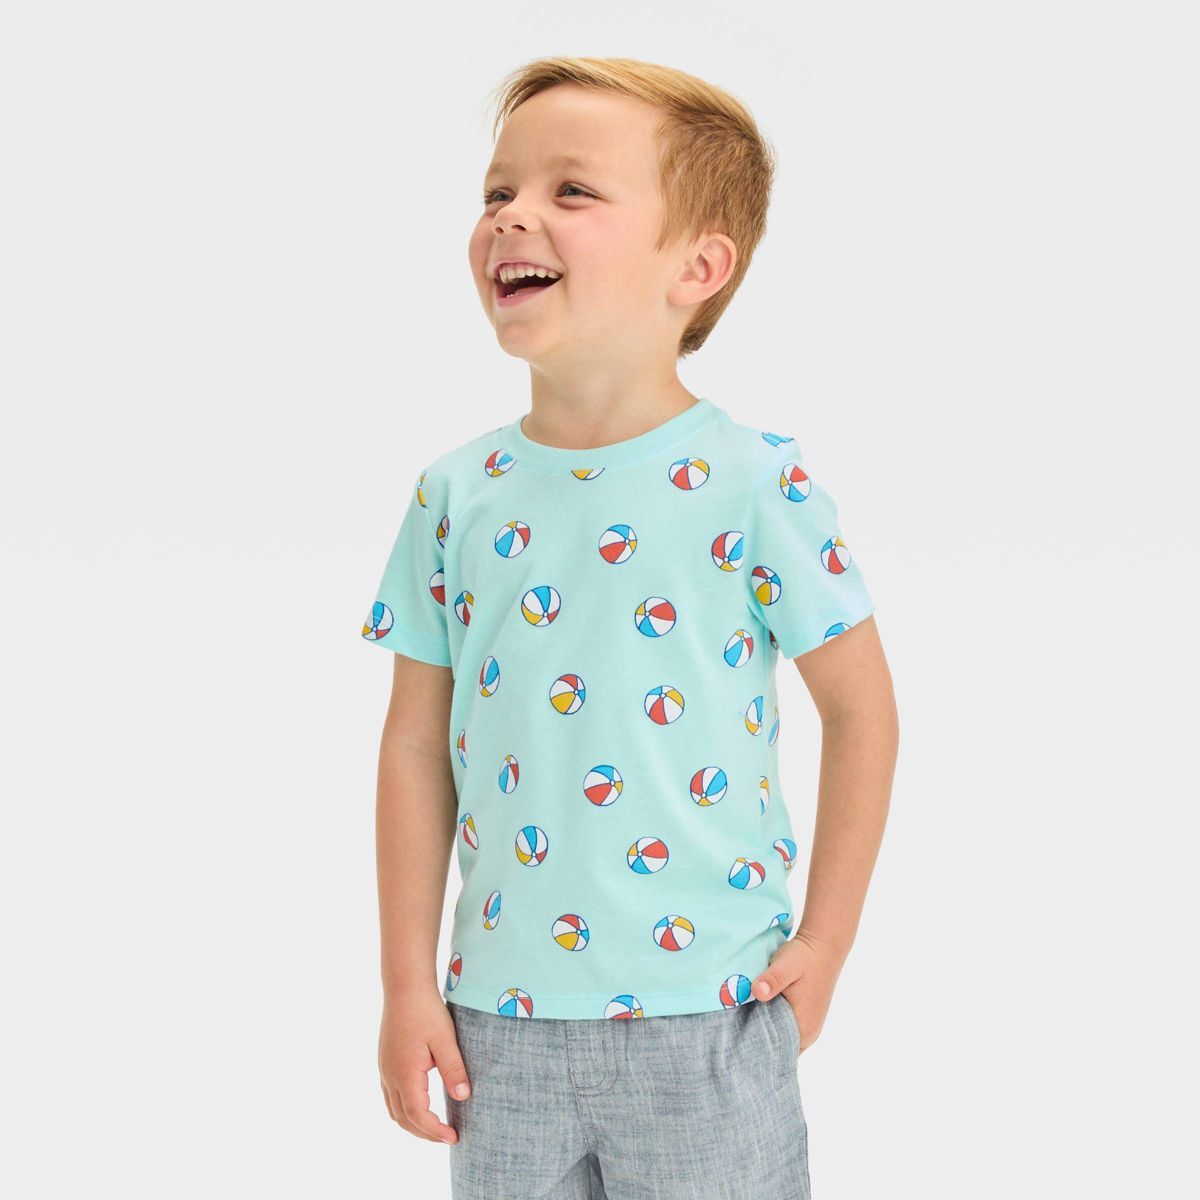 Toddler Boys' Jersey Knit T-Shirt - Cat & Jack™ Turquoise Blue | Target